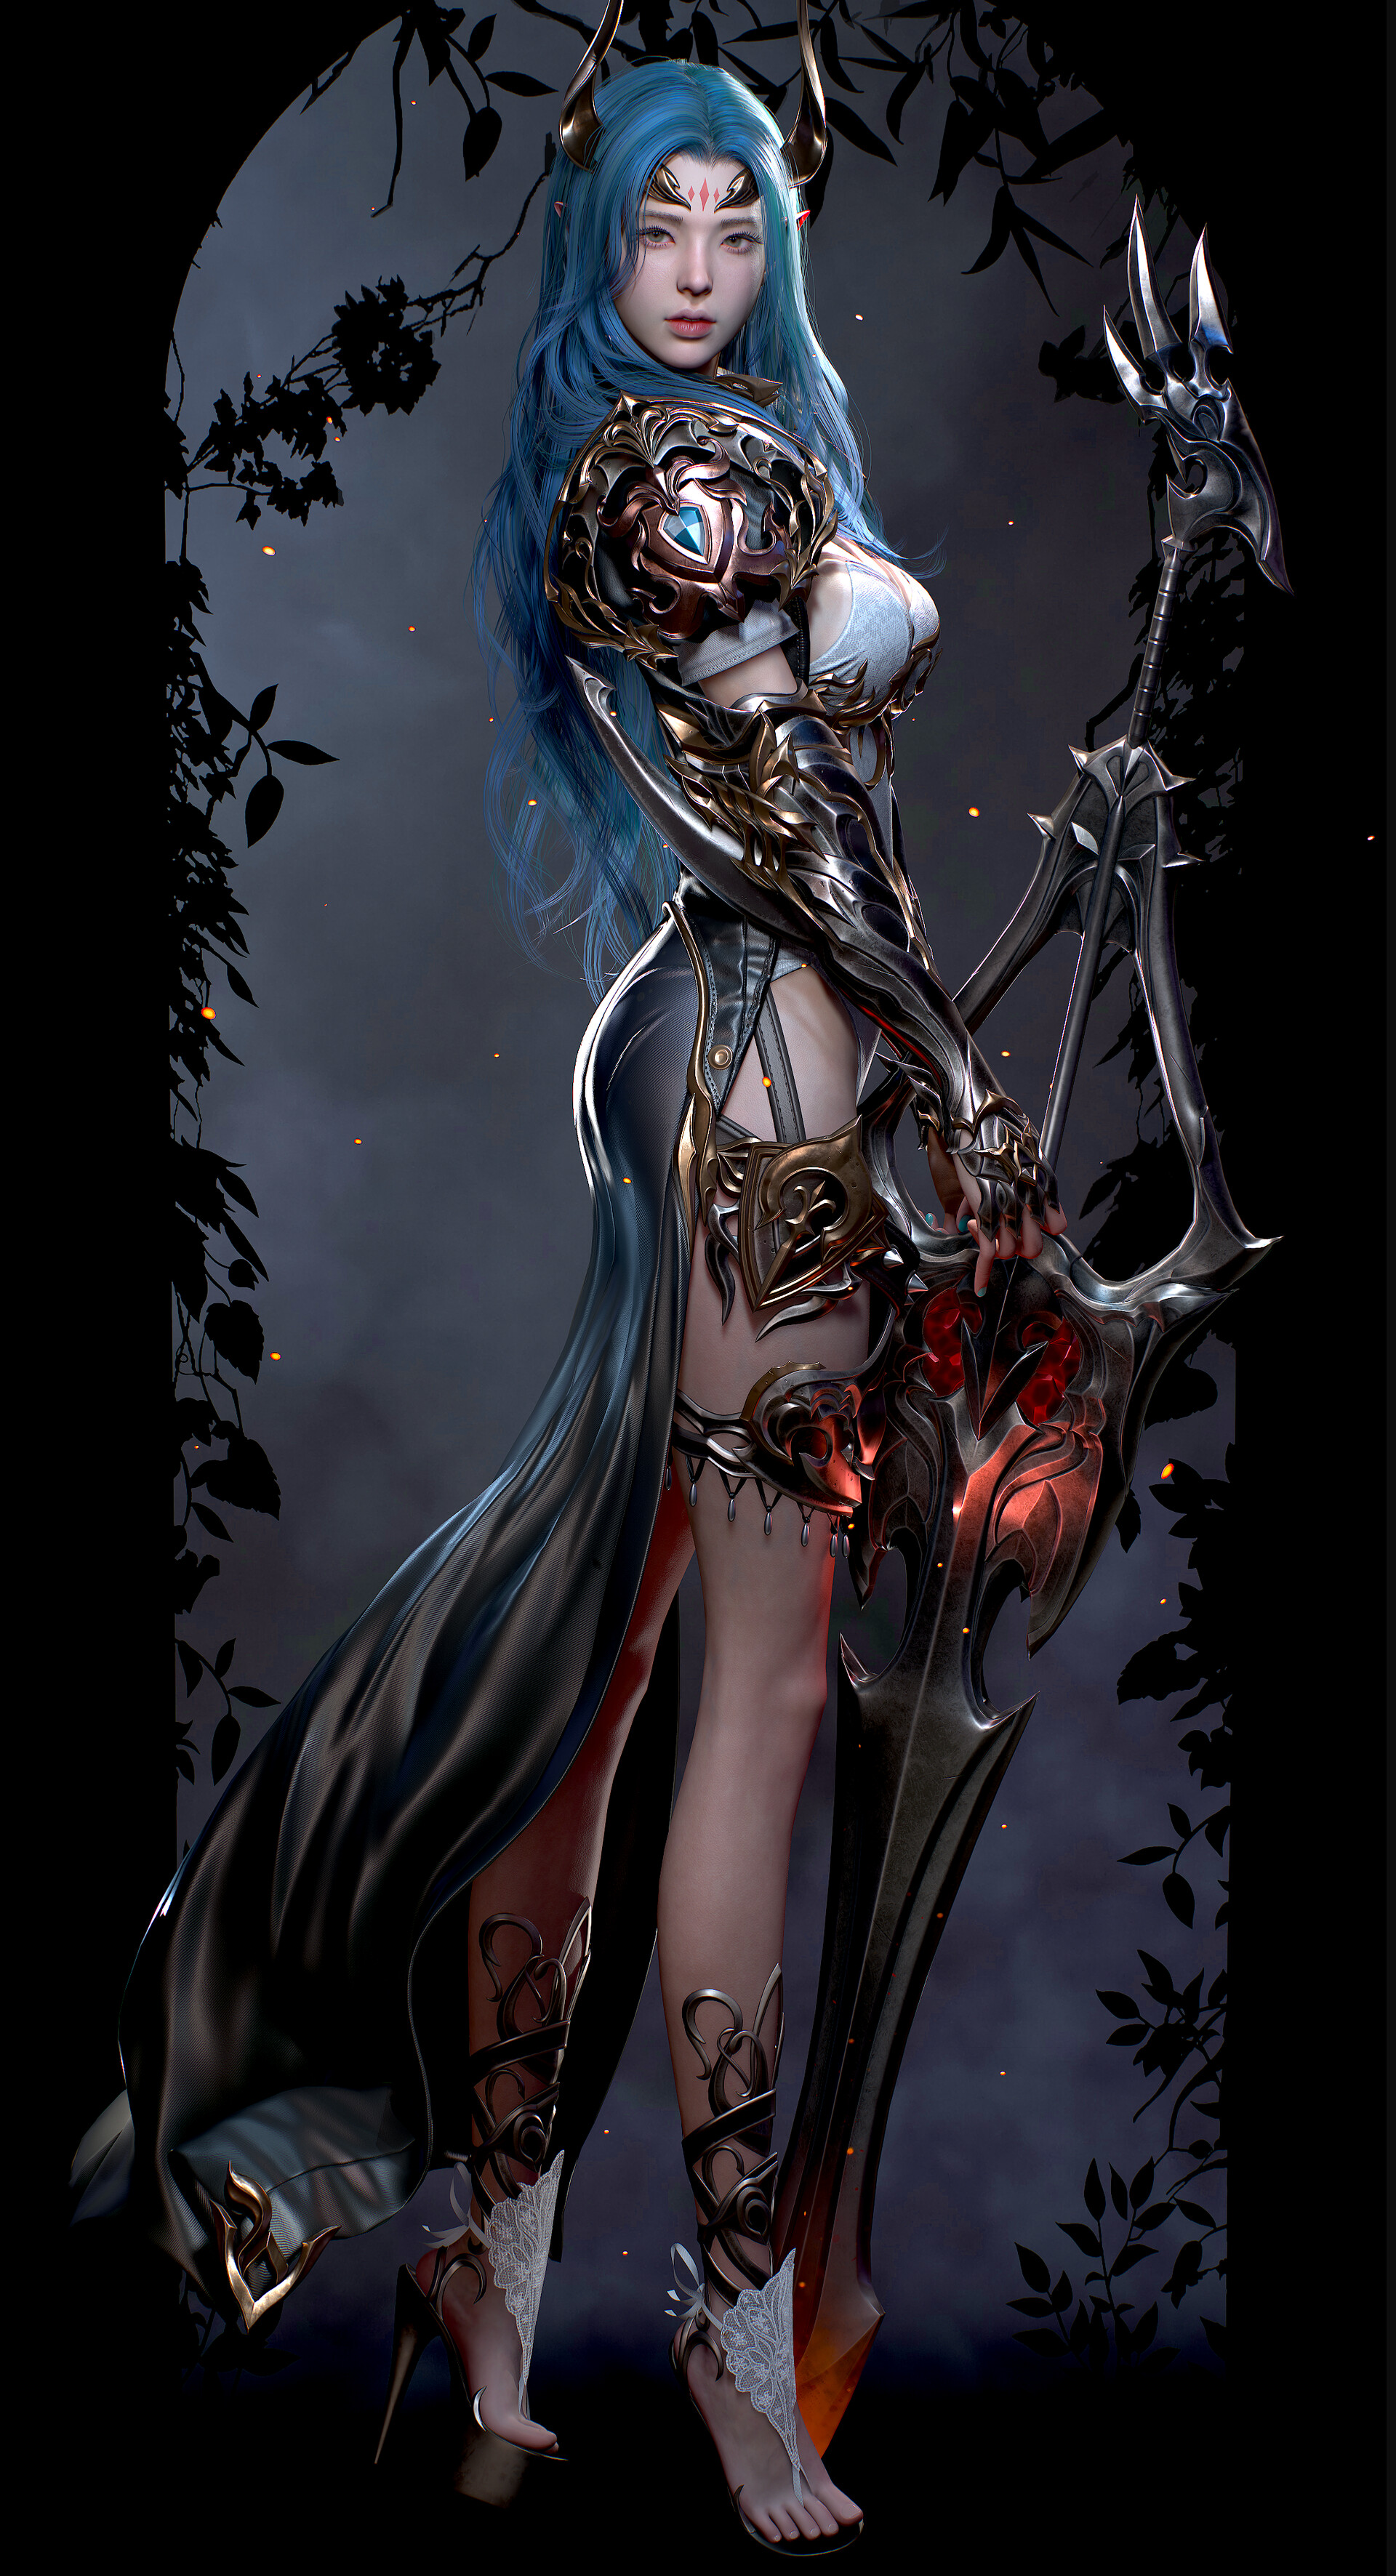 General 1920x3544 Nyl CGI women blue hair long hair dress shoes high heels fantasy art doorways weapon elves knight